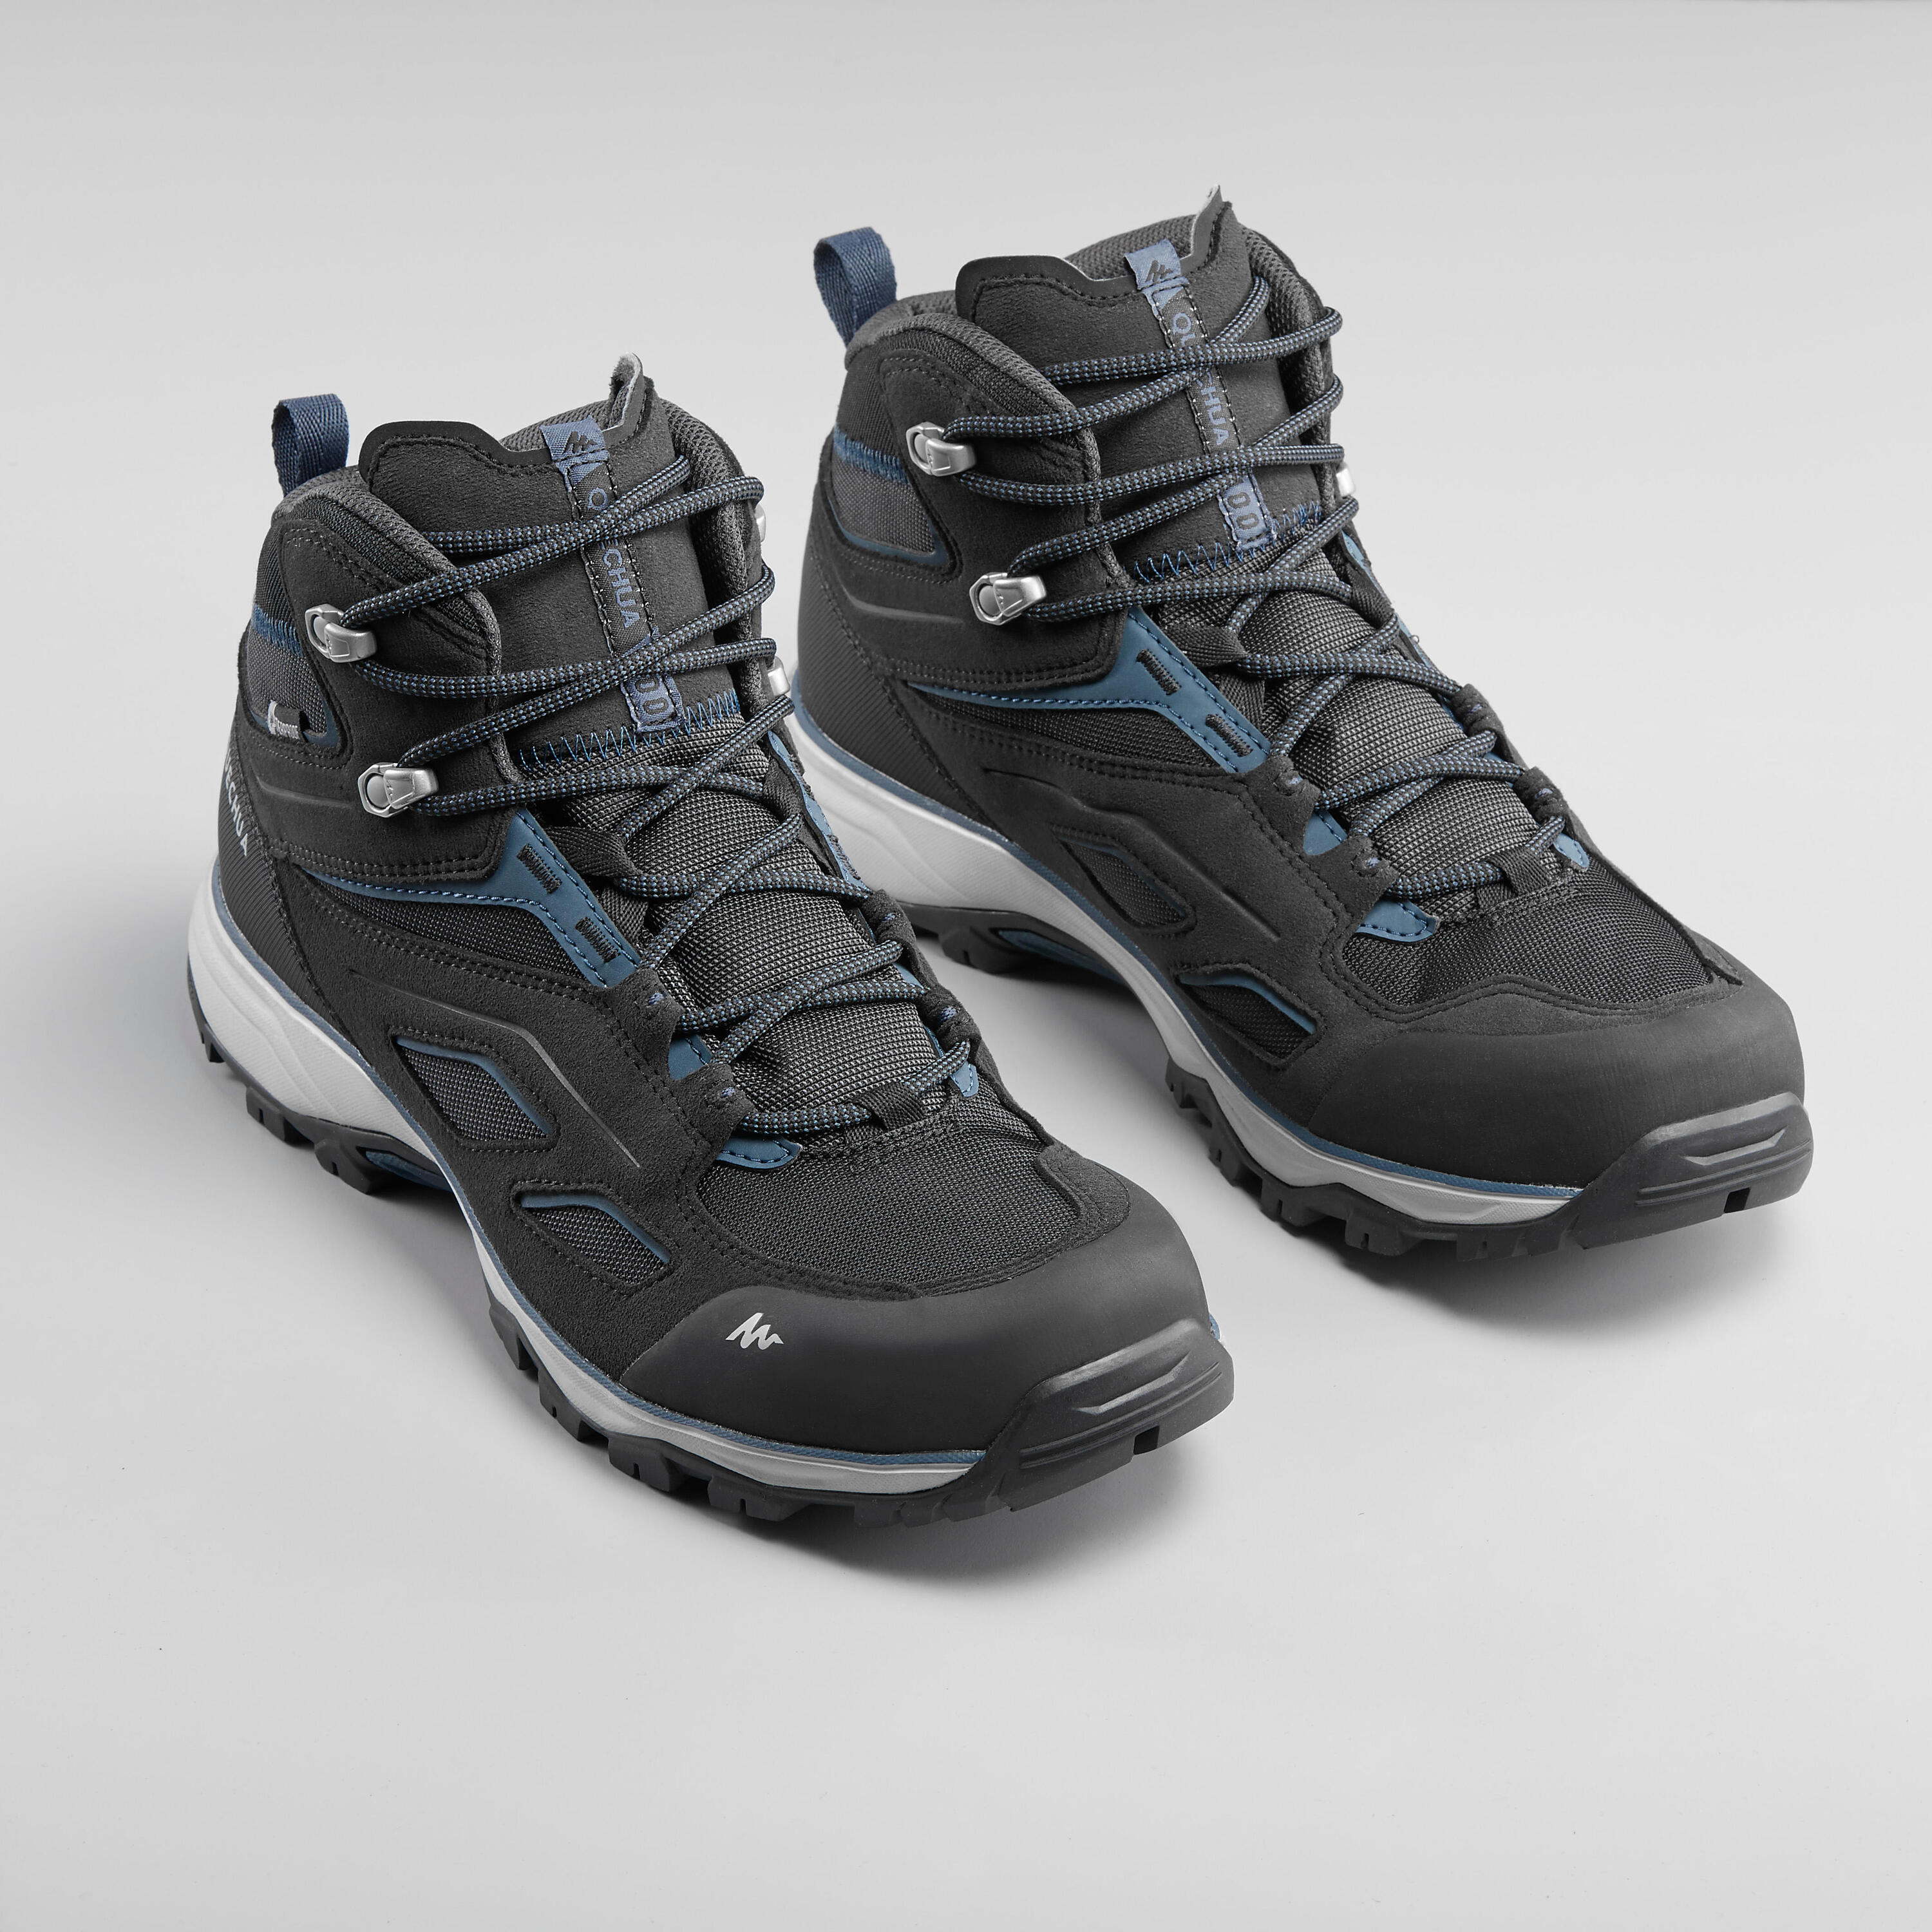 Men's Waterproof Mountain Walking Boot-Shoes - MH100 Mid - Black 6/6